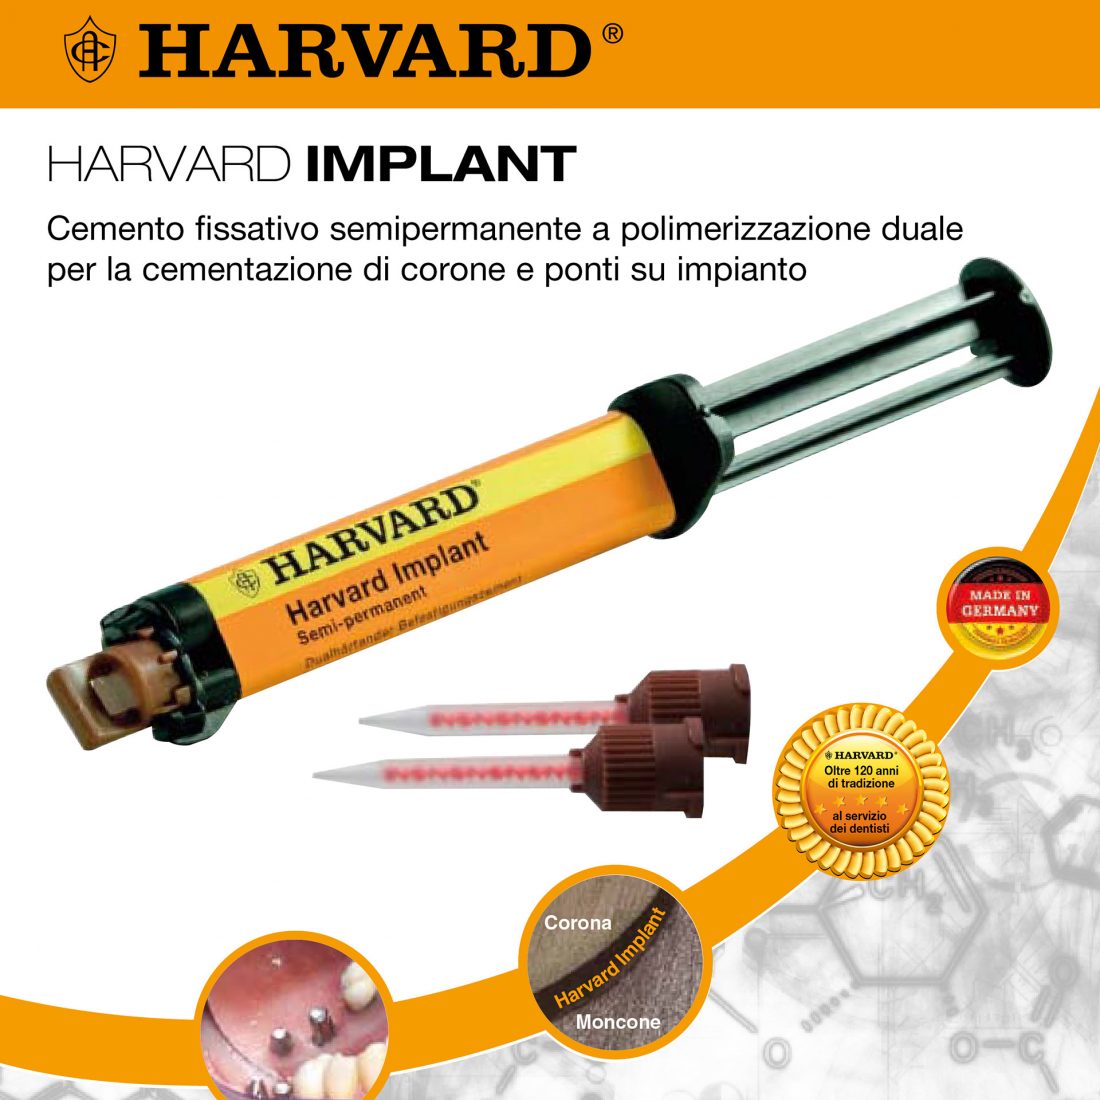 cemento fissativo Harvard implant